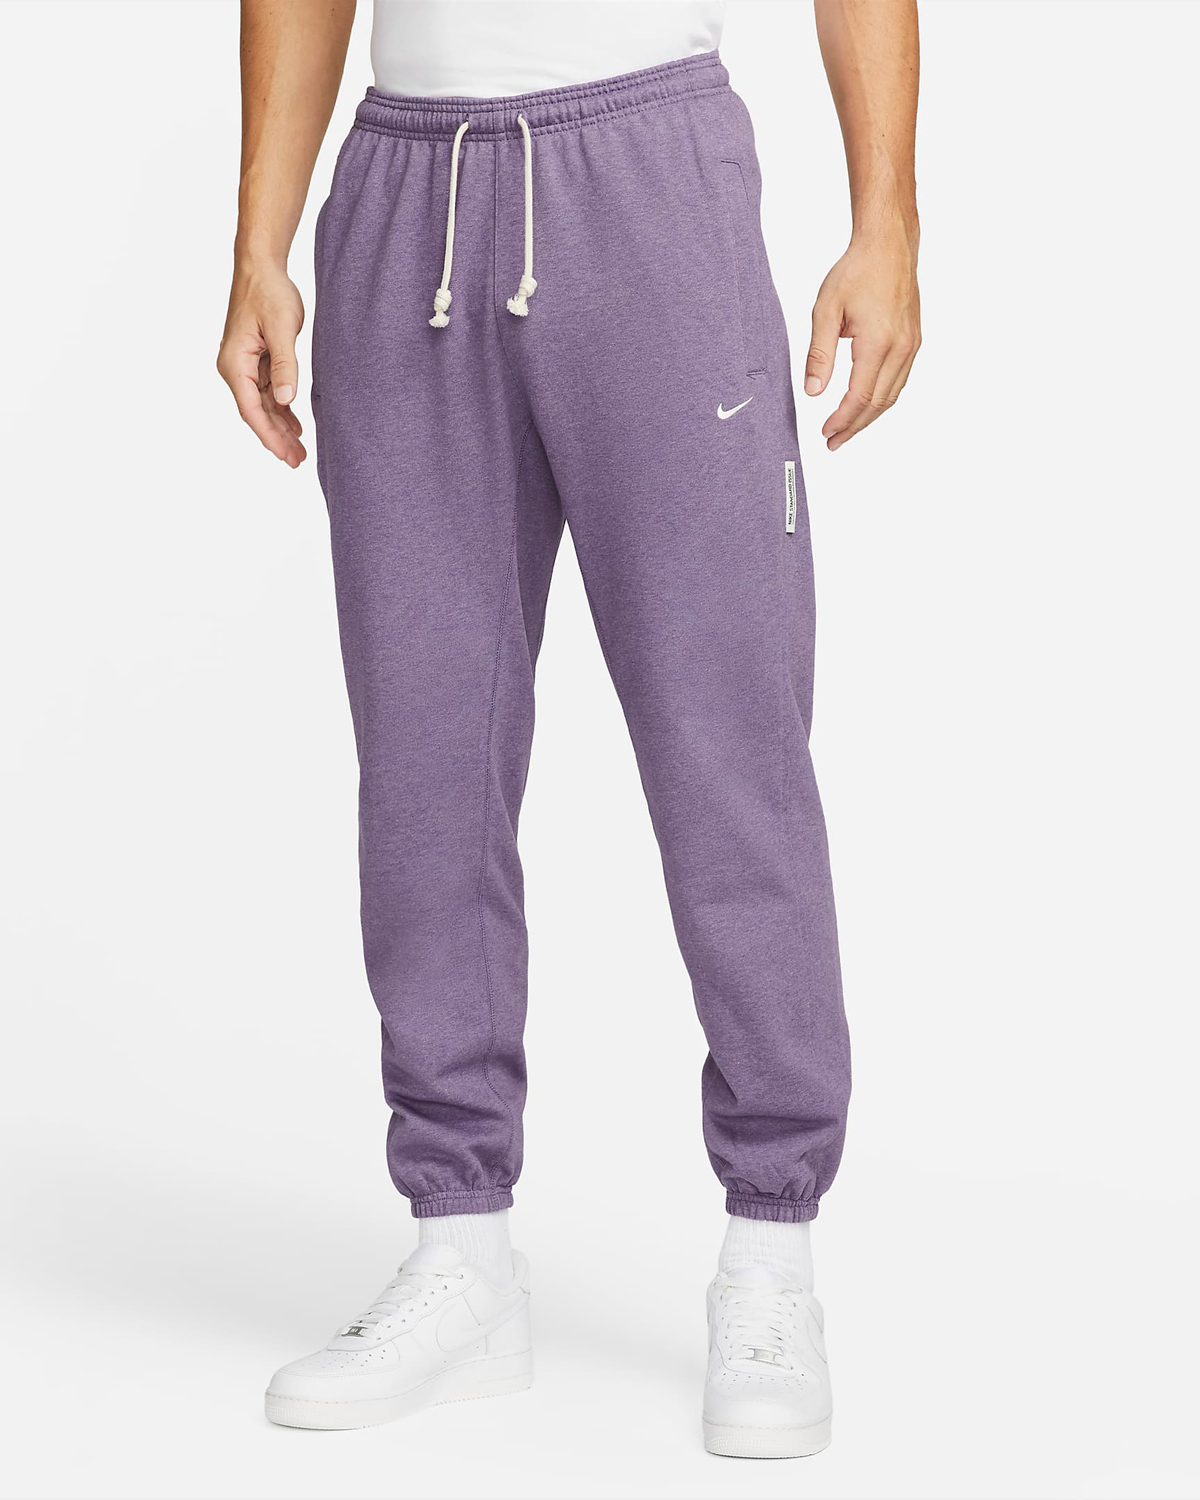 Nike-Standard-Issue-Pants-Canyon-Purple